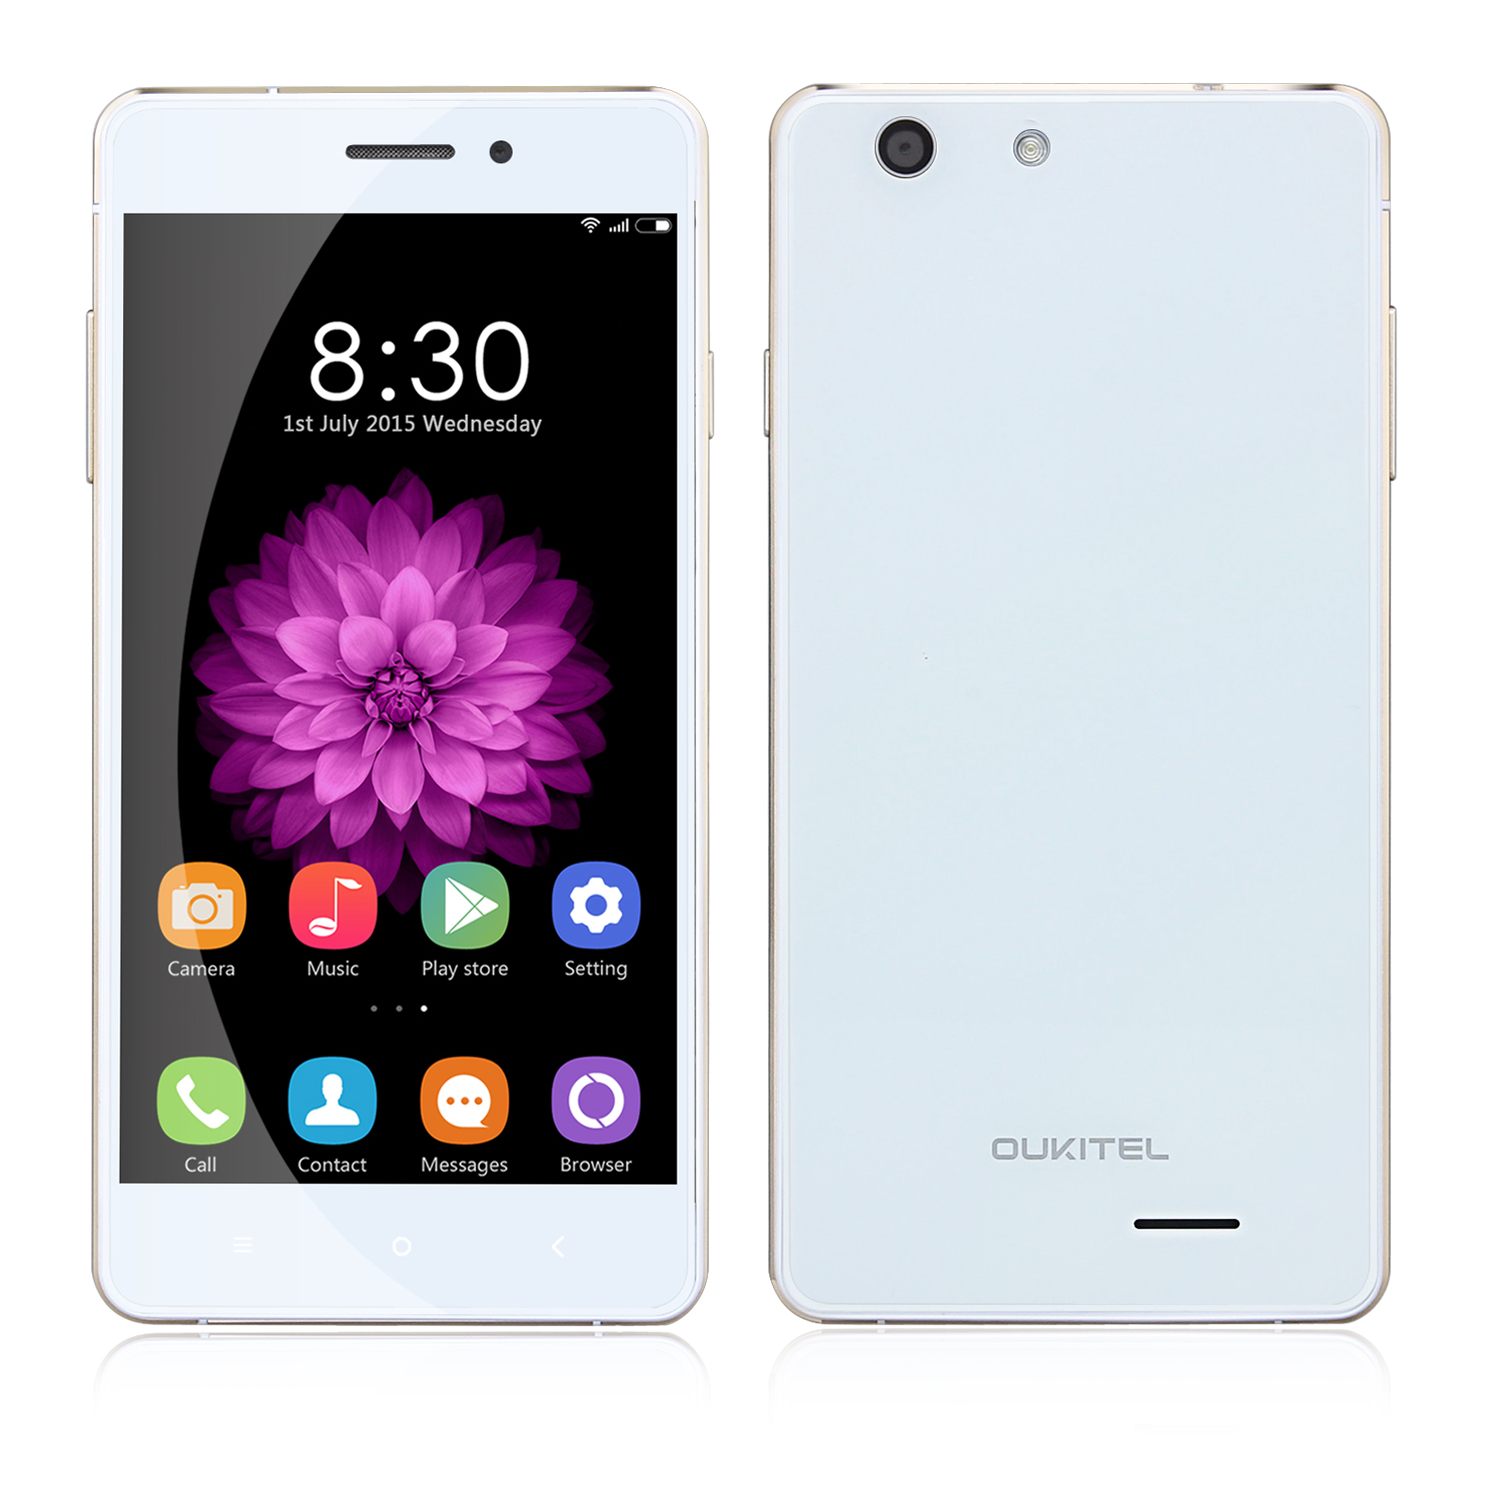 OUKITEL U2 Smartphone Double Glass 4G LTE 64bit Quad Core 5.0 Inch Android 5.1 - White